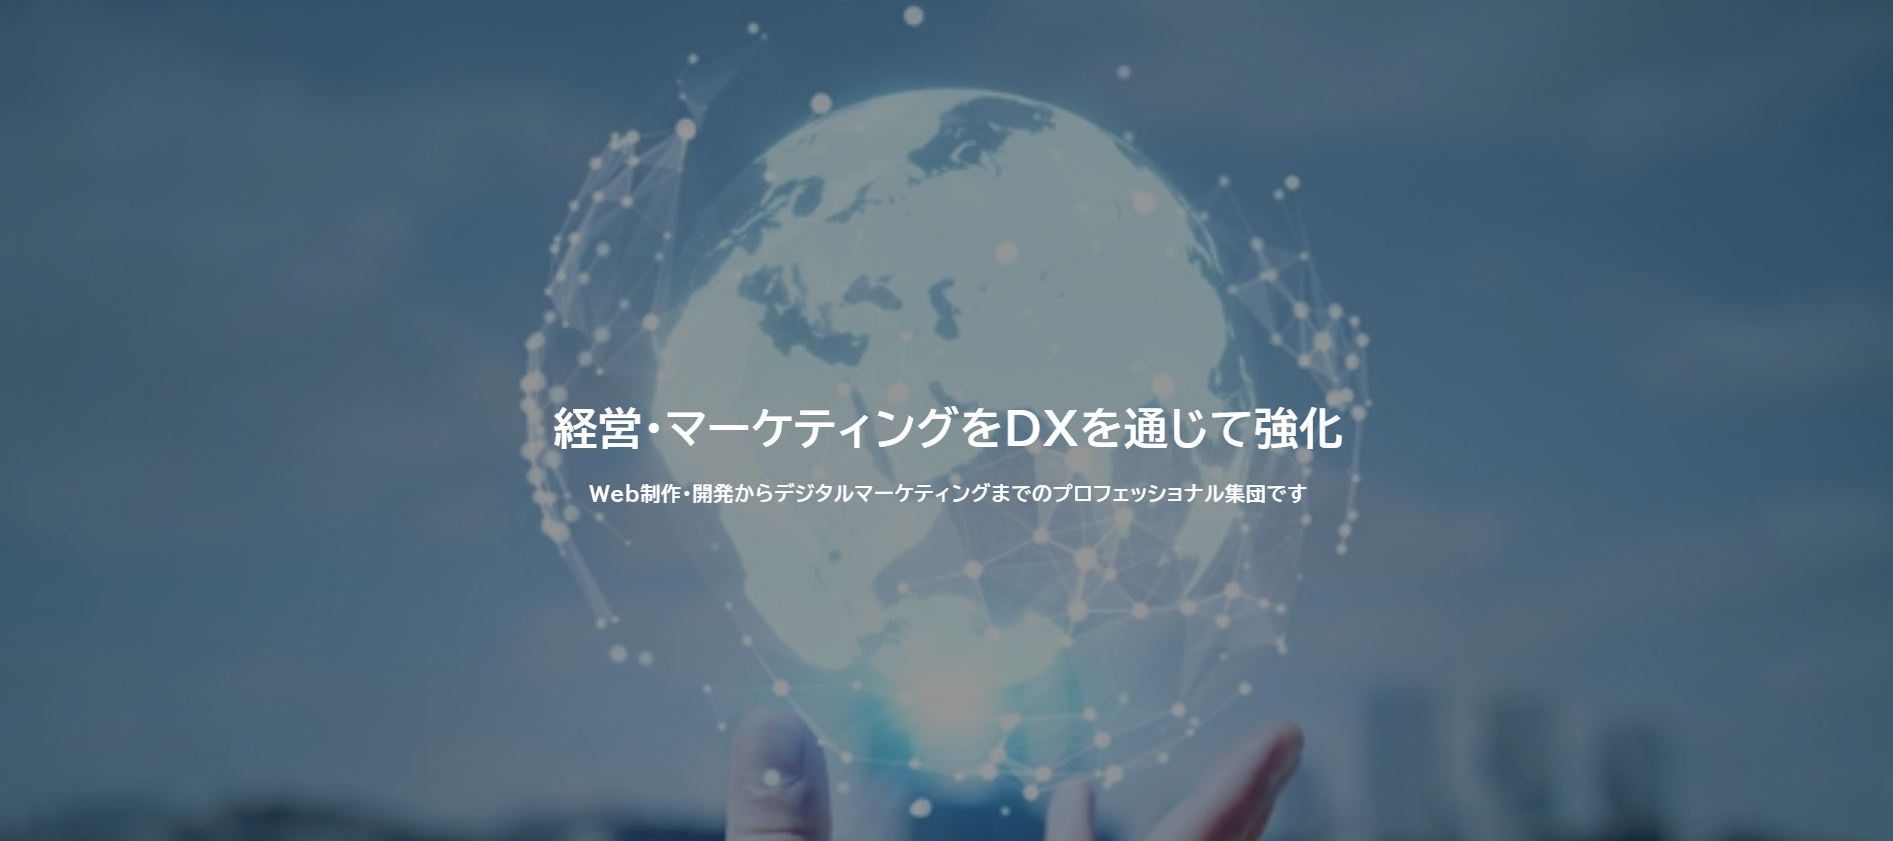 UDX株式会社のUDX株式会社:システム開発サービス